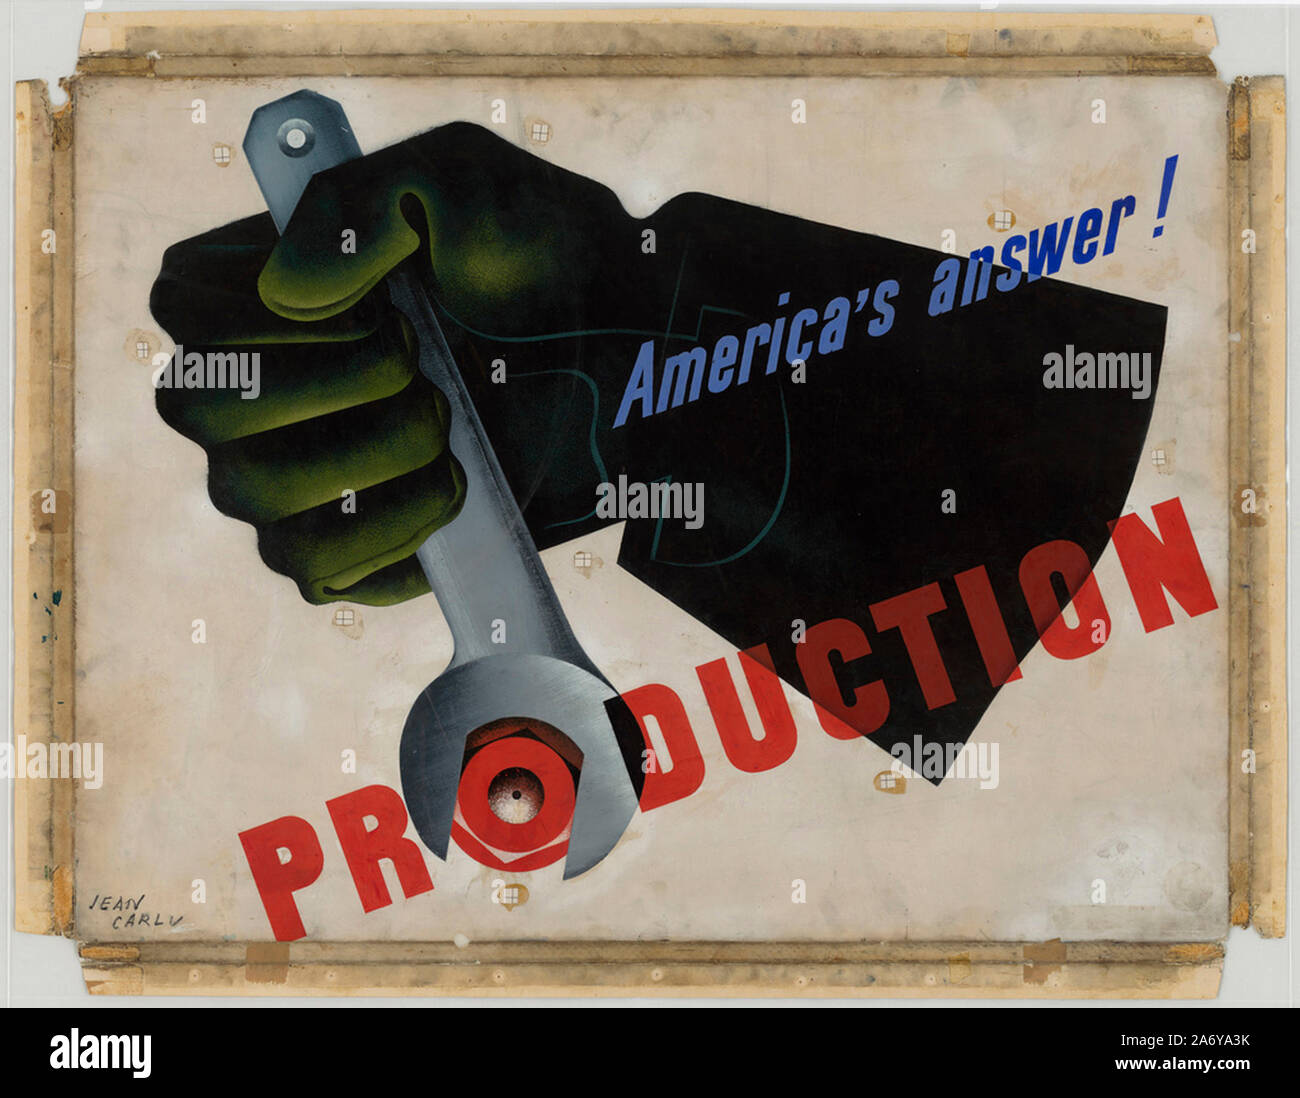 vintage war poster propaganda illustrated artwork Stock Photo - Alamy